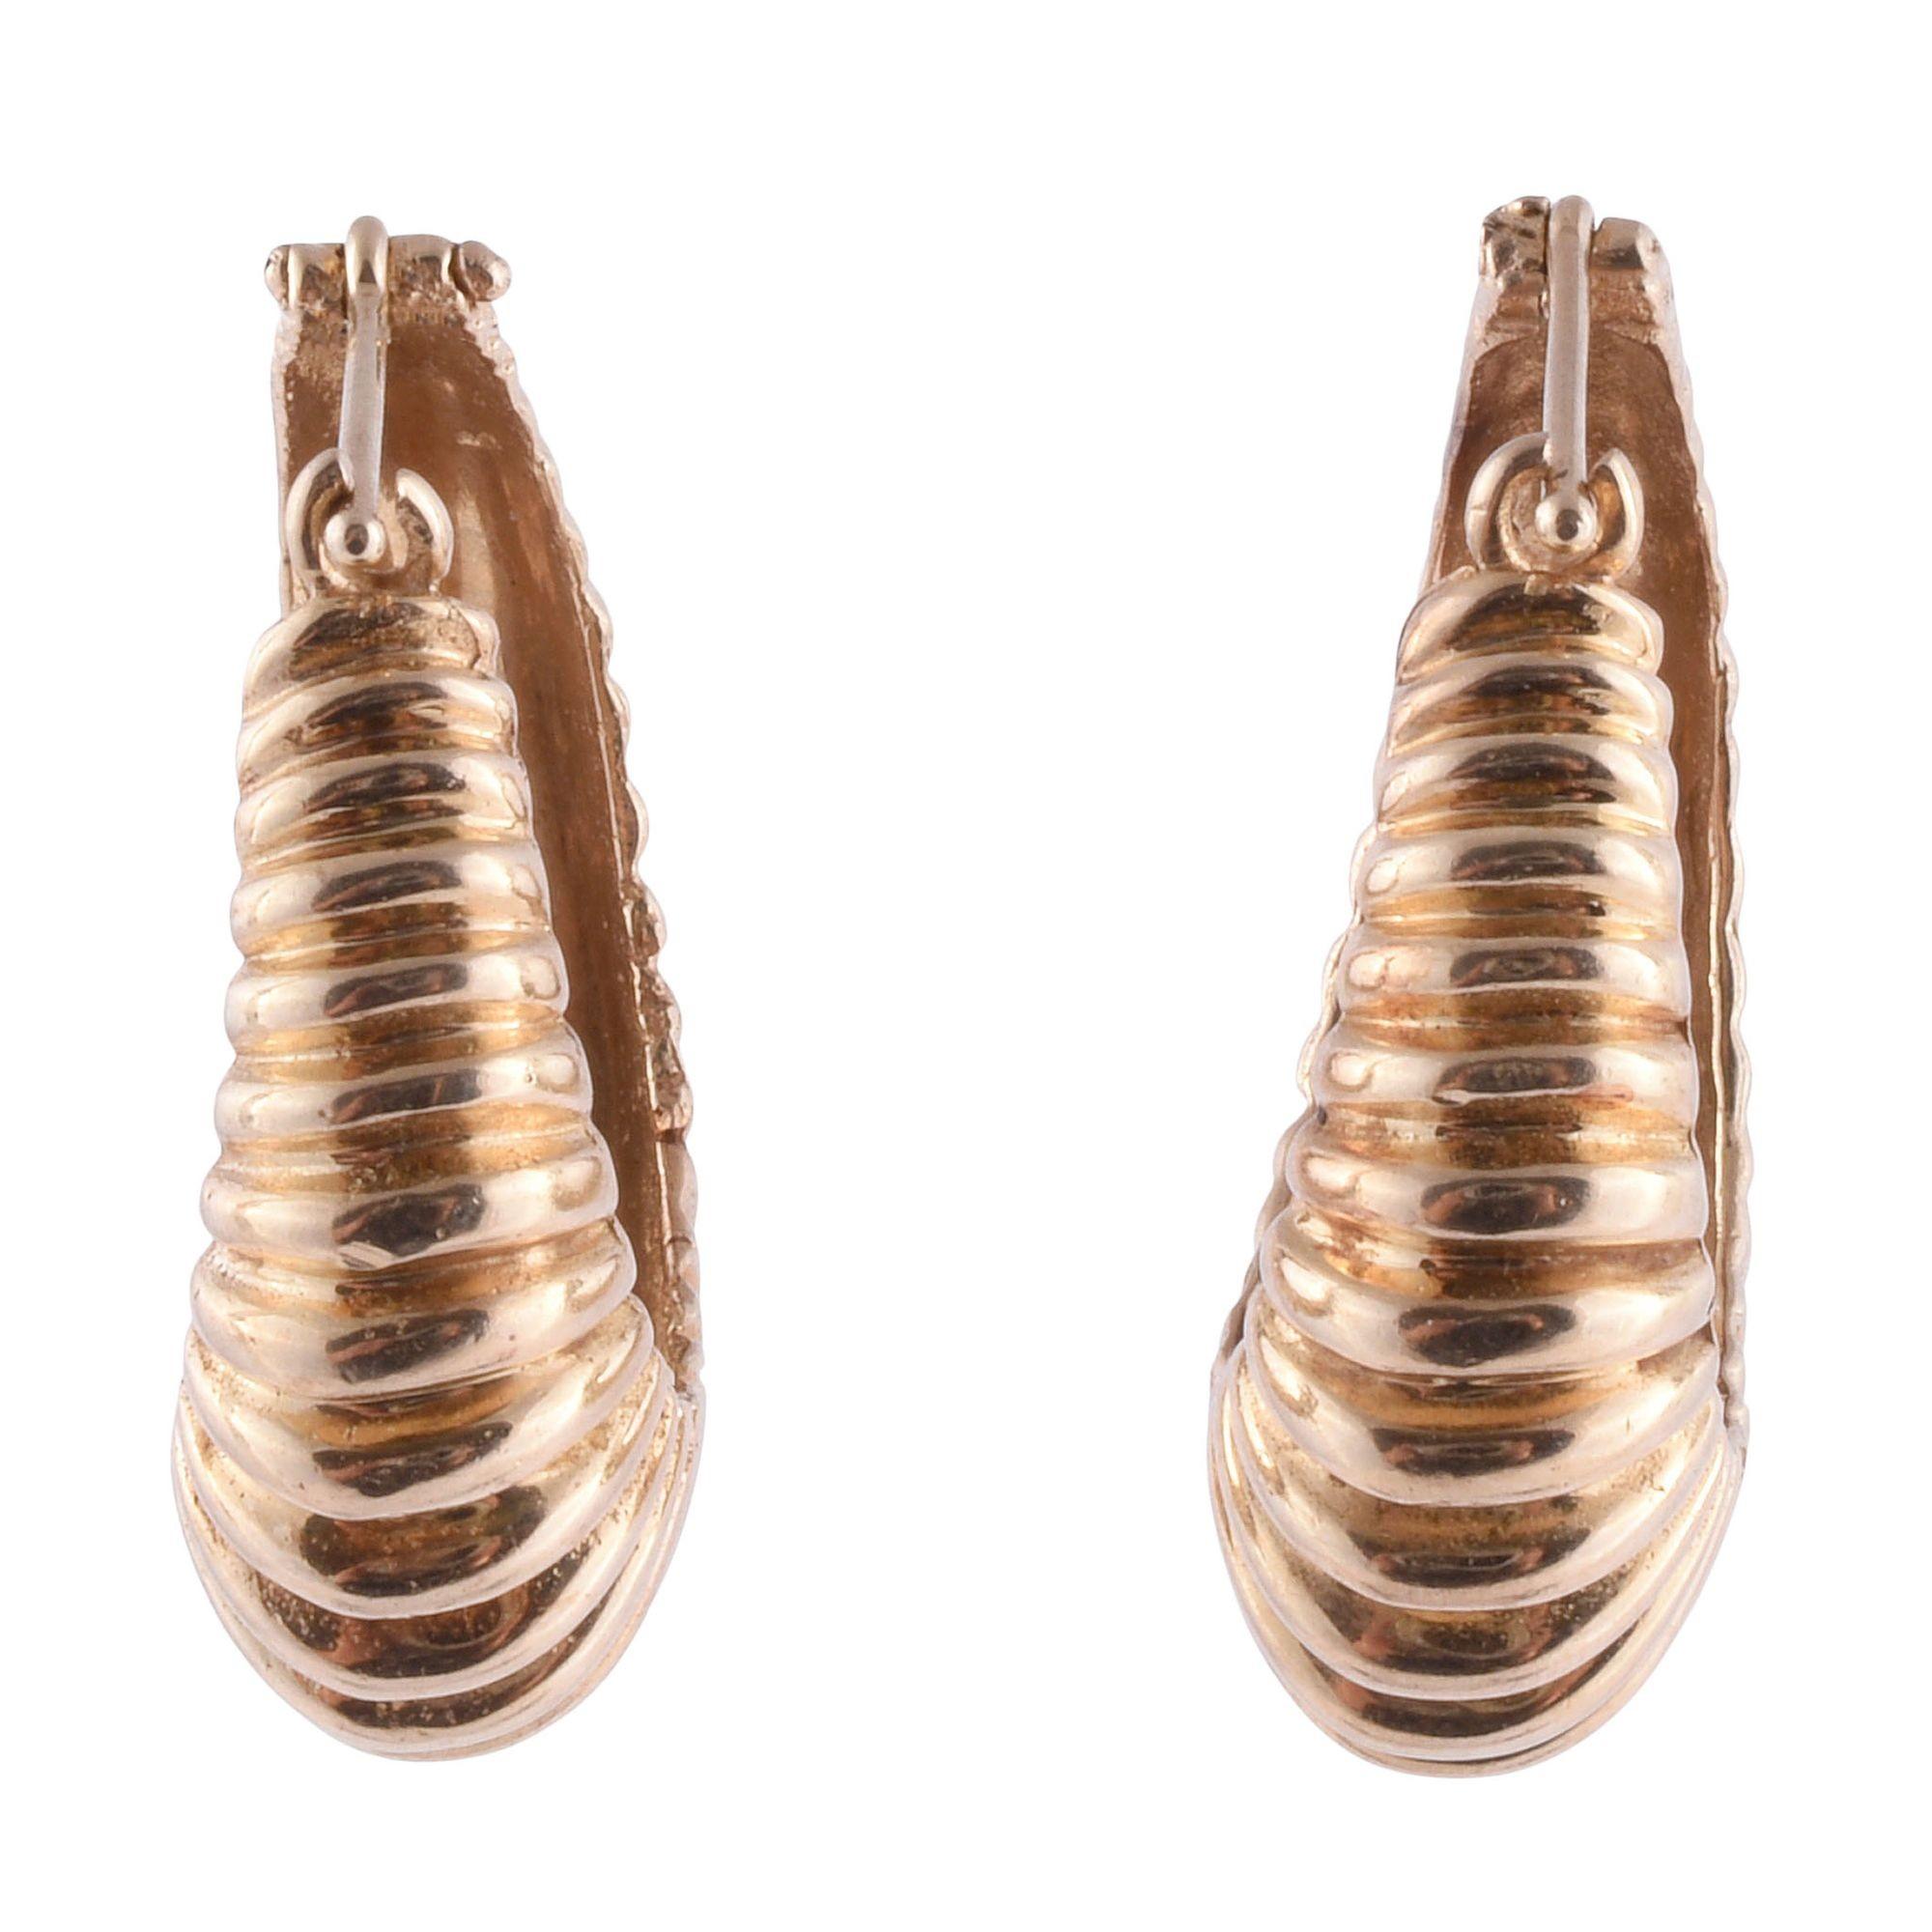 Vintage ribbed hoop earrings, circa 1970. These vintage earrings in a ribbed hoop style are crafted in 14 karat yellow gold. [KIMH 547]